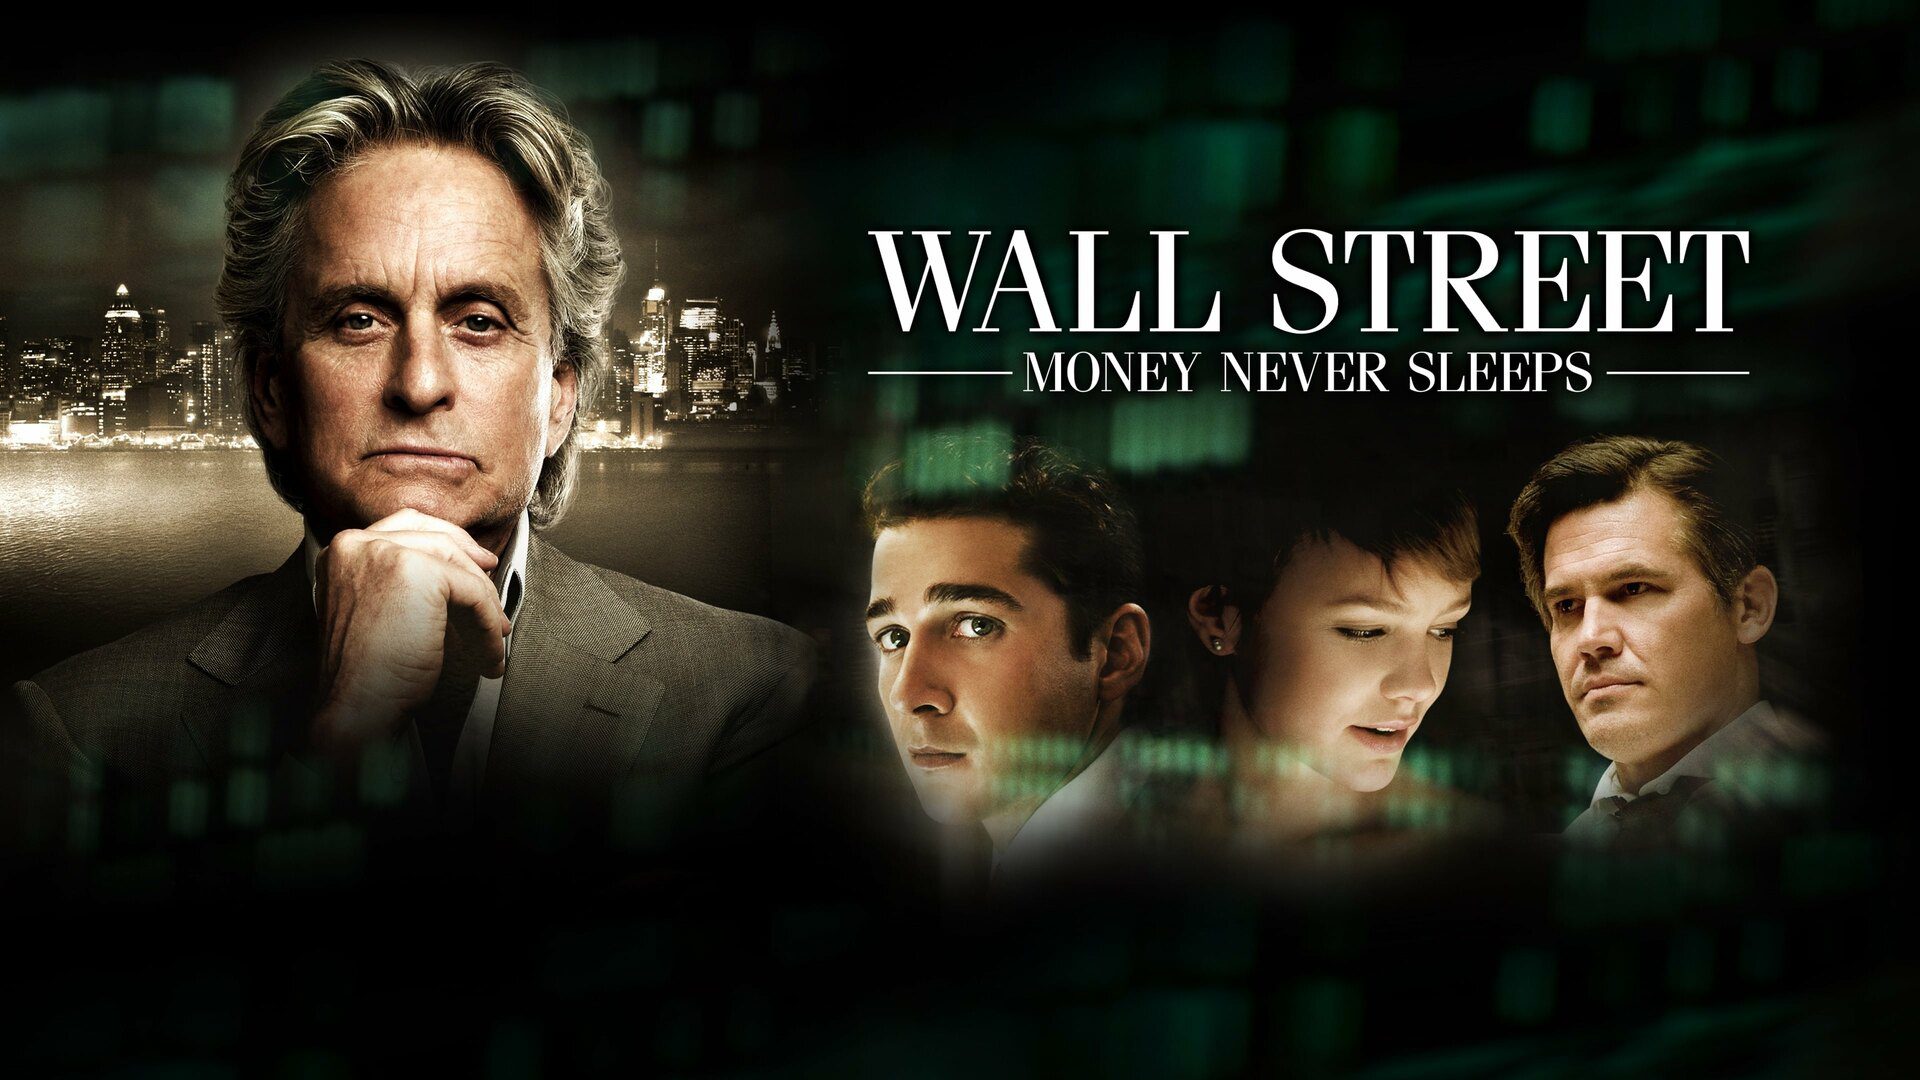  Wall Street, Money Never Sleeps.